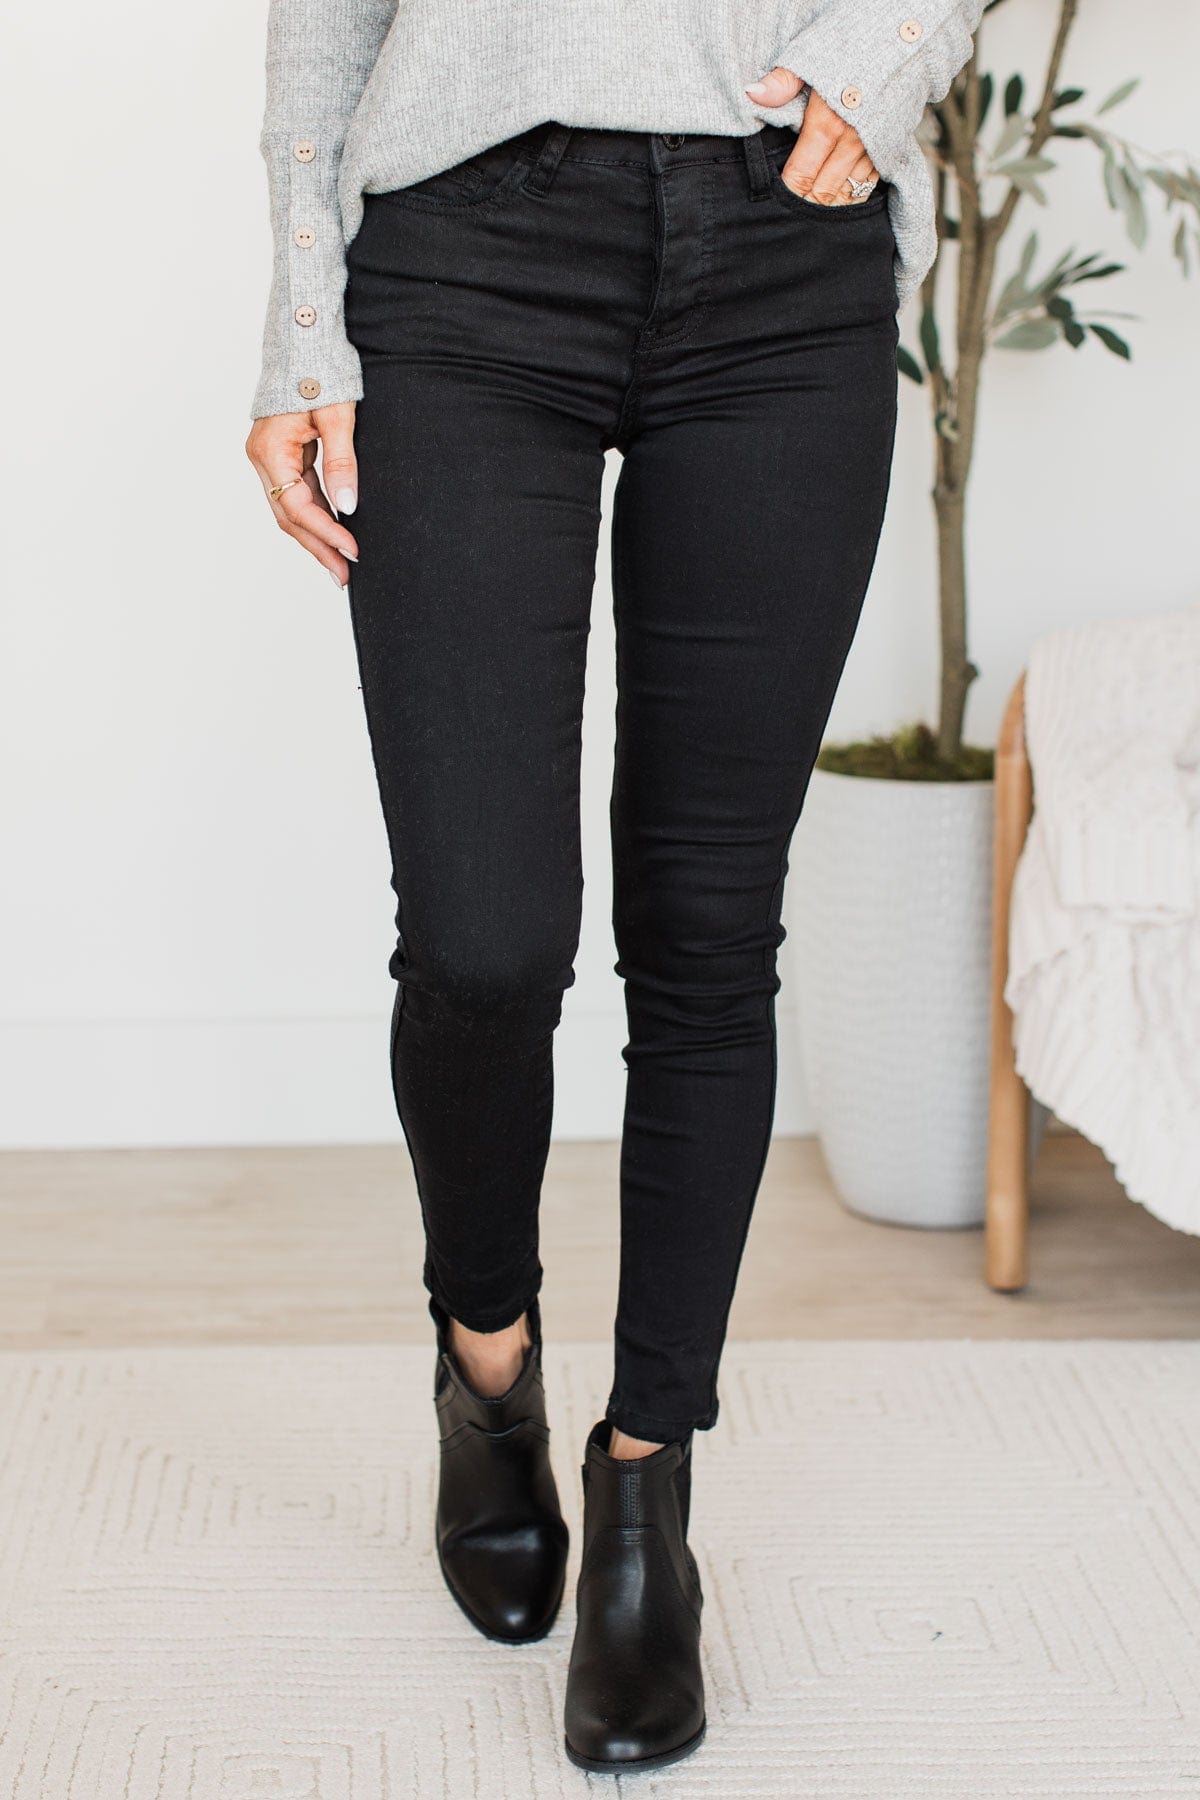 Buy Simply Be Lottie Wide Leg Black Jeggings from Next Canada